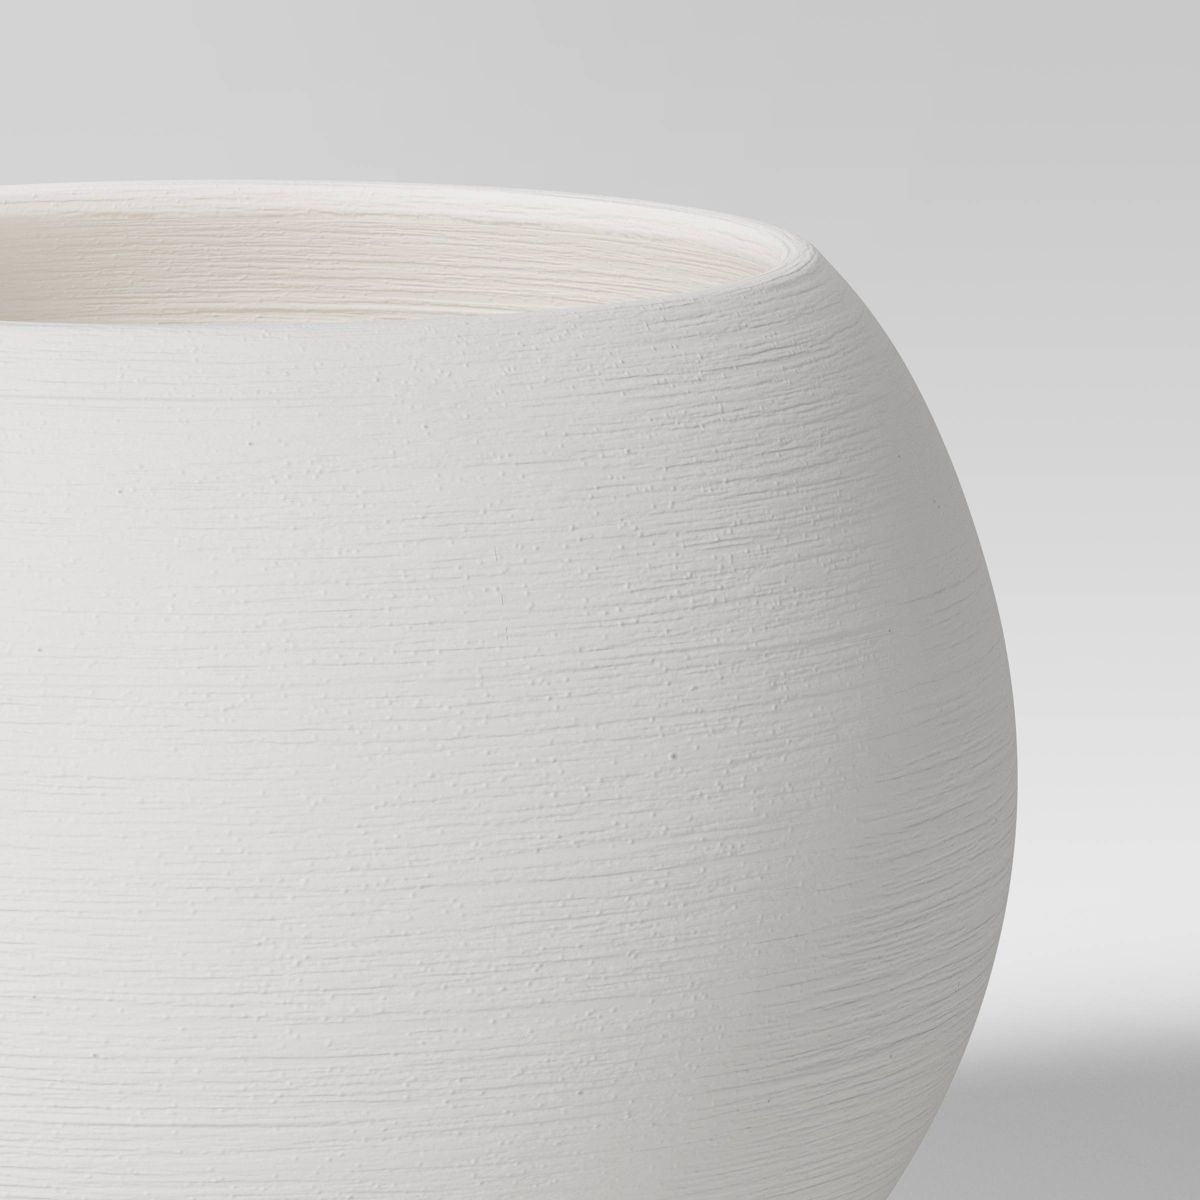 Small Ceramic Textured Planter White - Threshold™ | Target